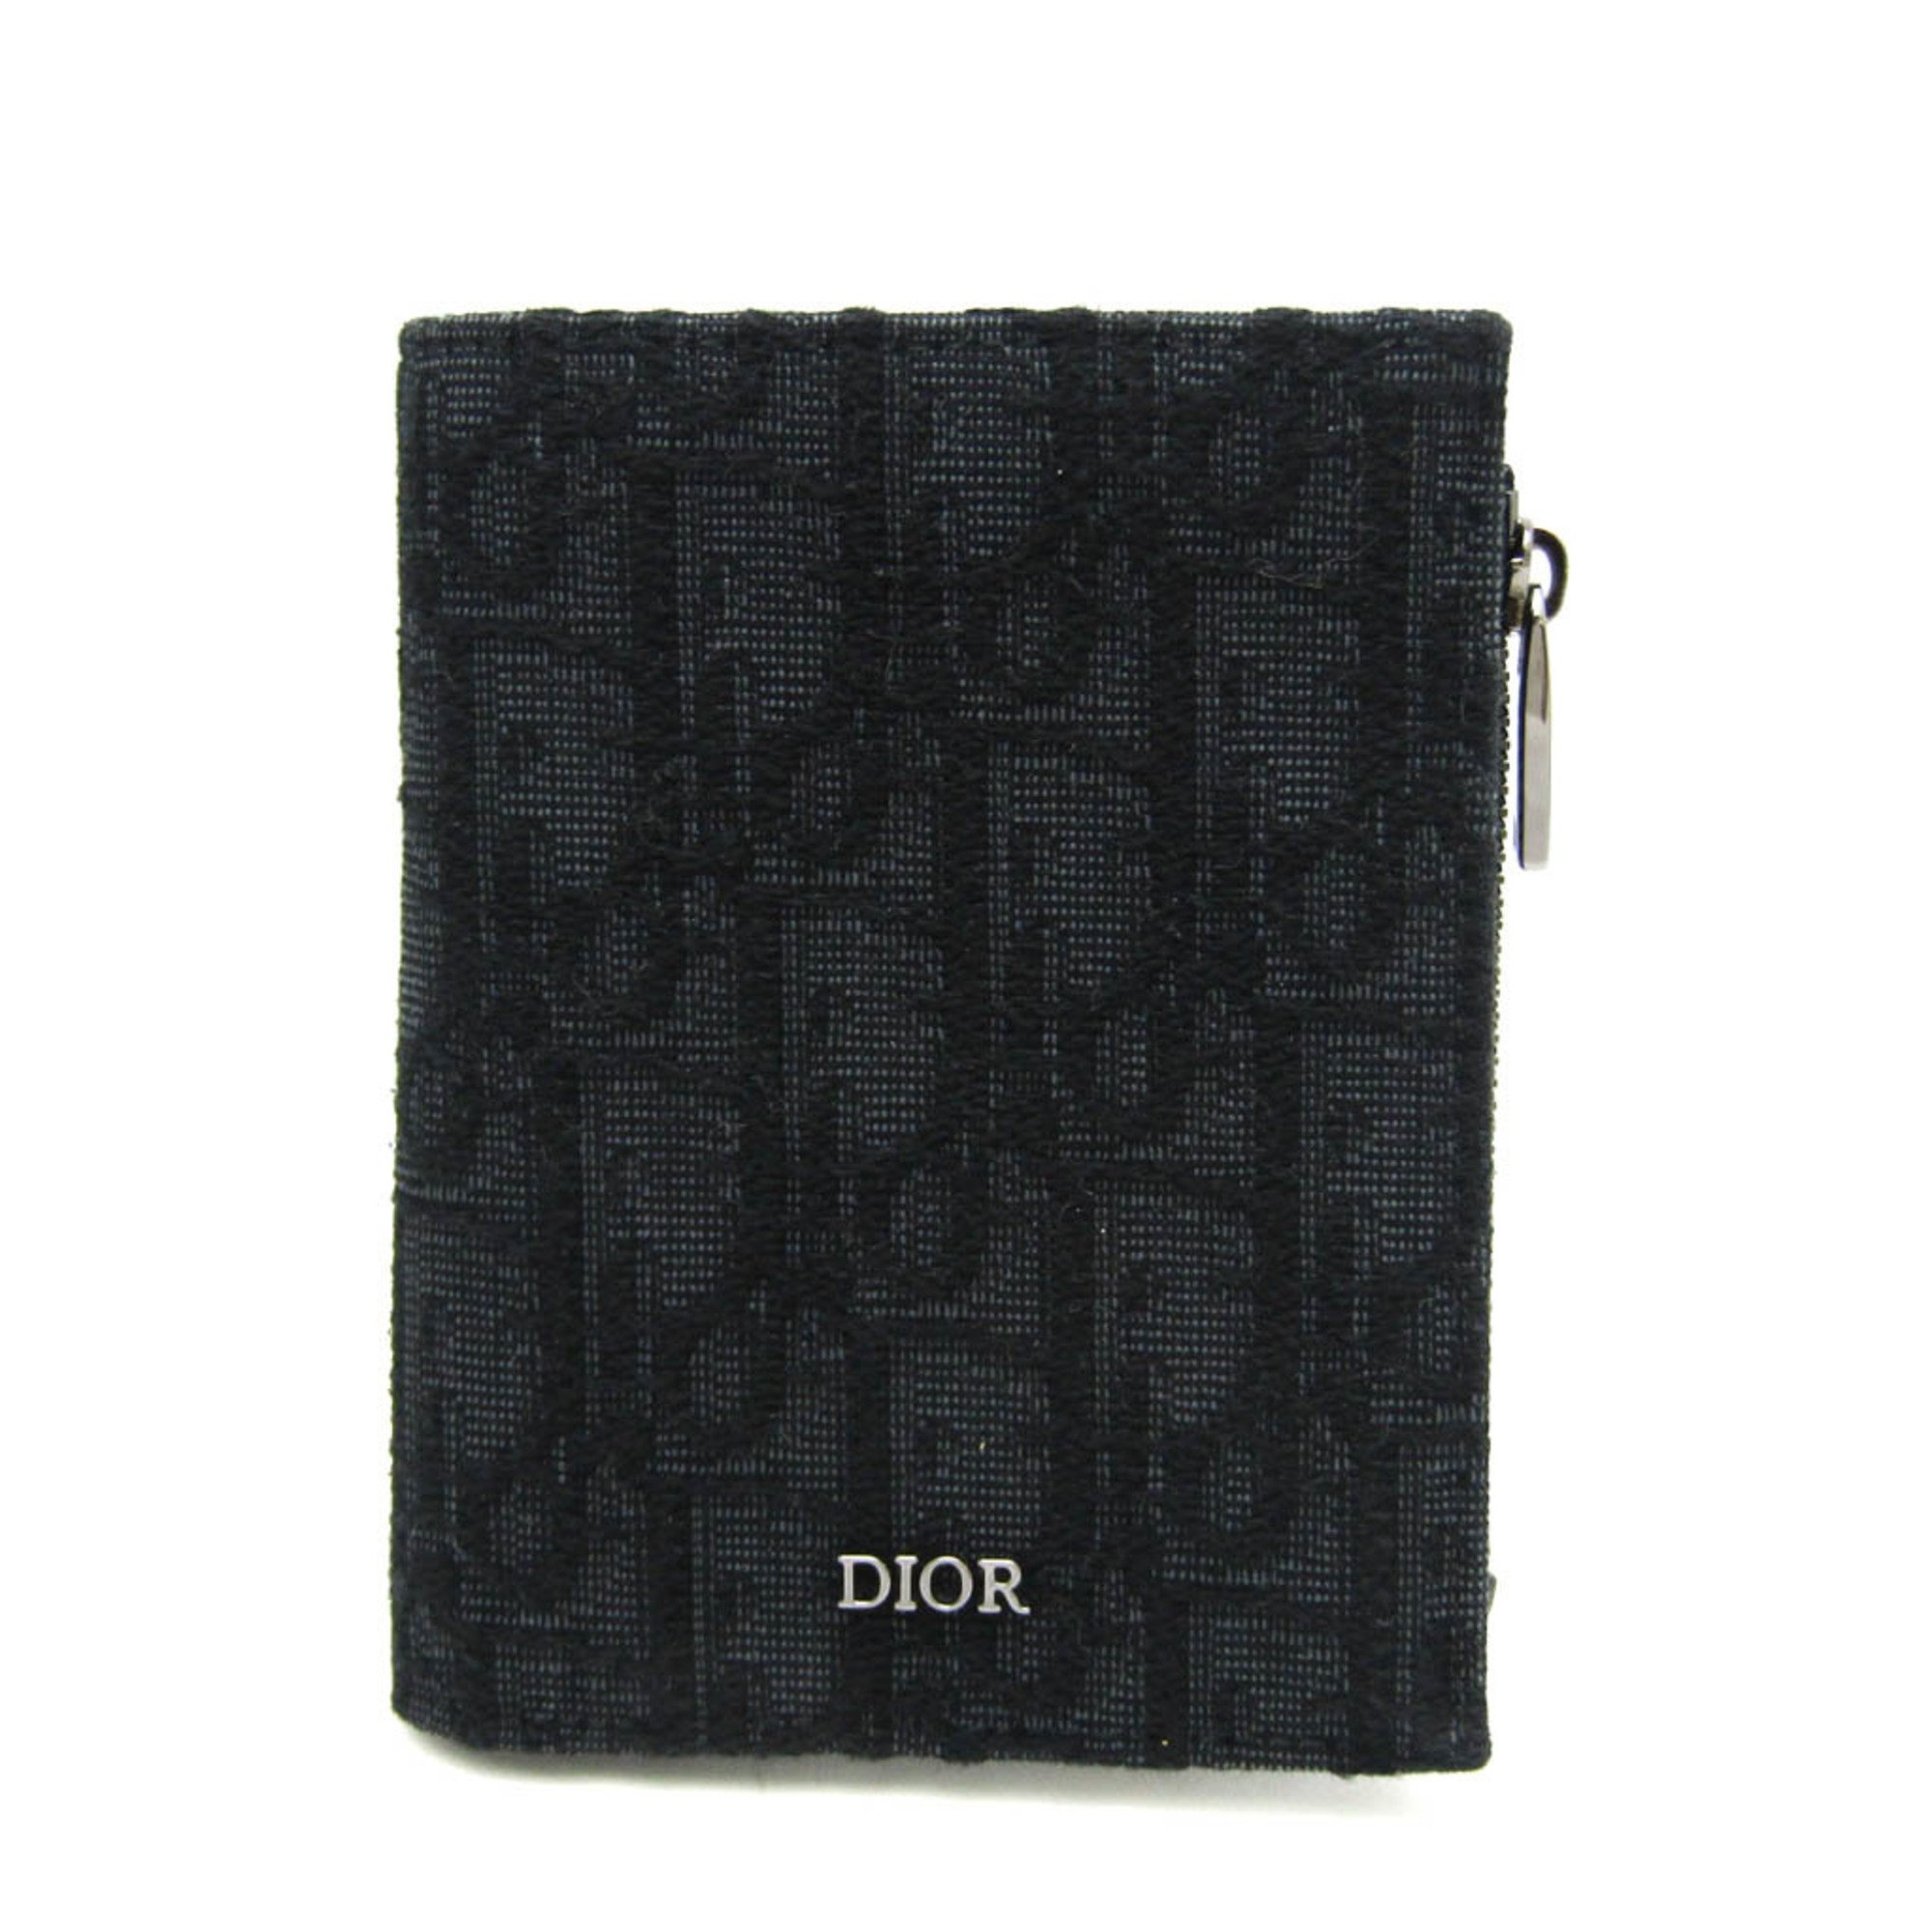 Dior オブリーク 2つ折り財布間違っていたらすみません